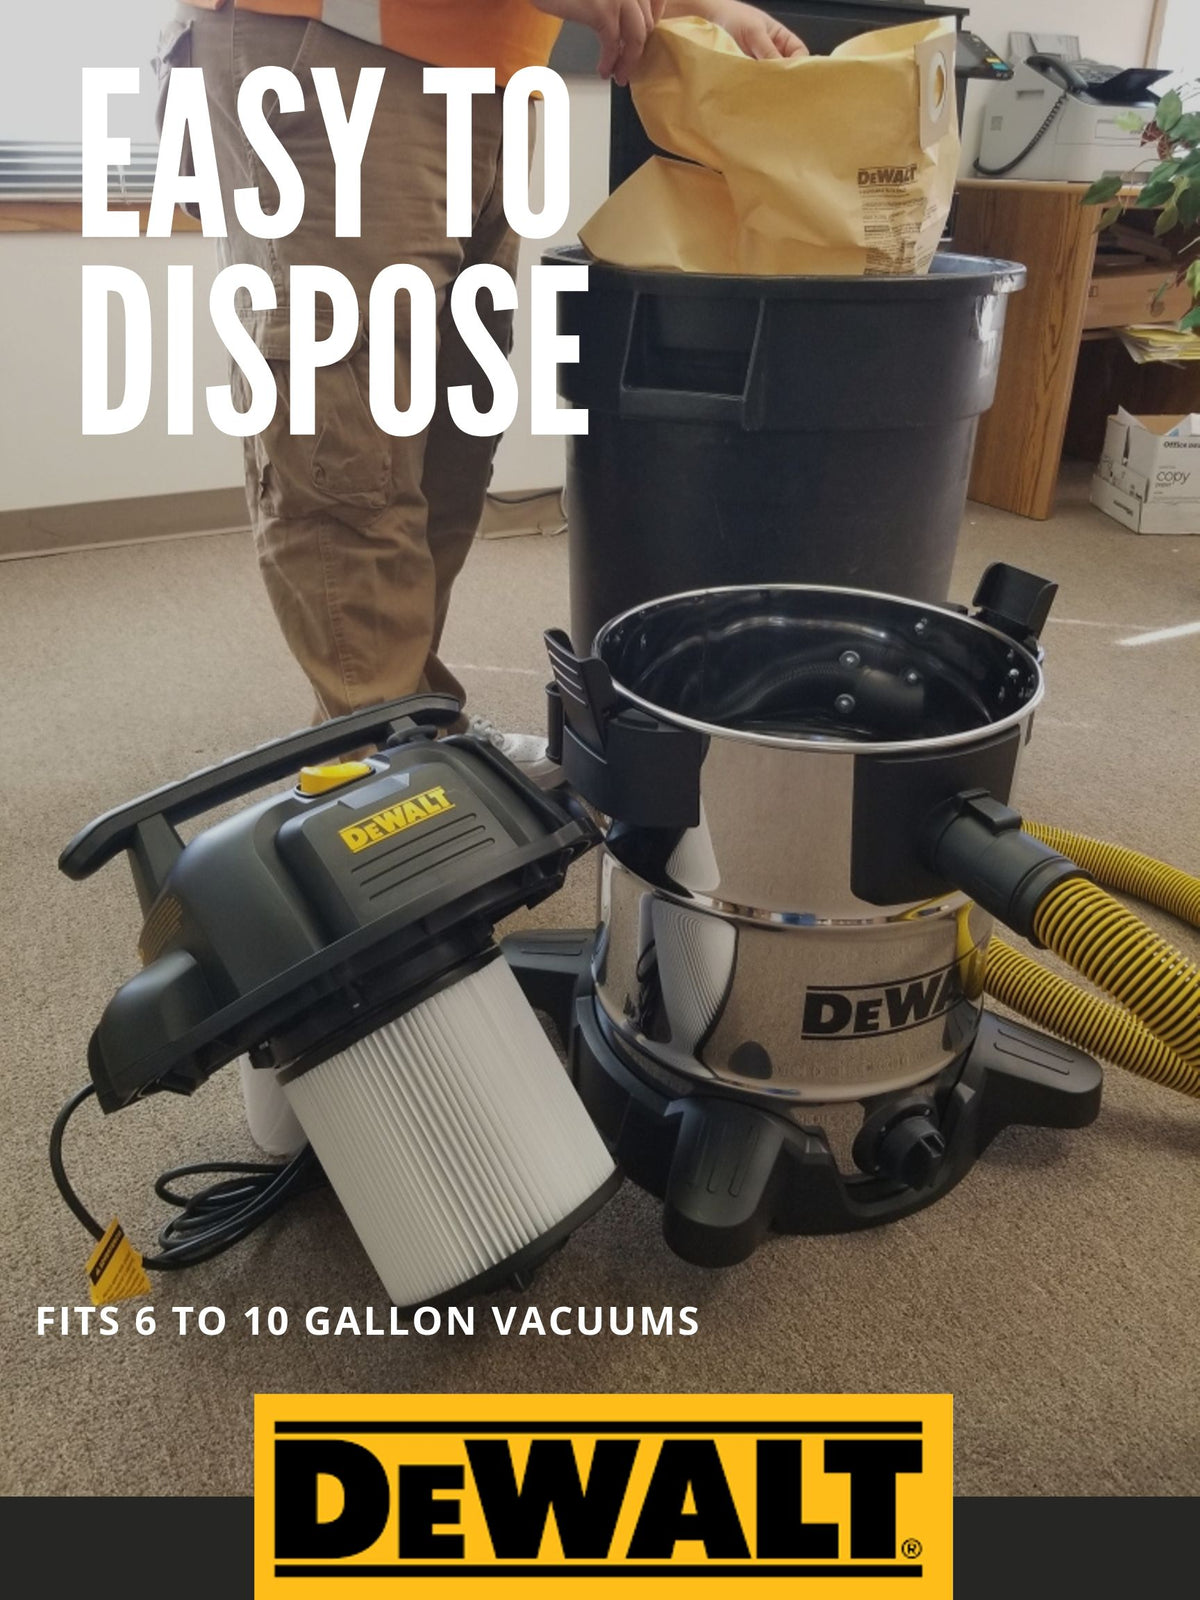 DXVA19-4101 DEWALT Disposable Filter Bag (3) for 6-10 Gallon DeWalt Wet/Dry Vacuums